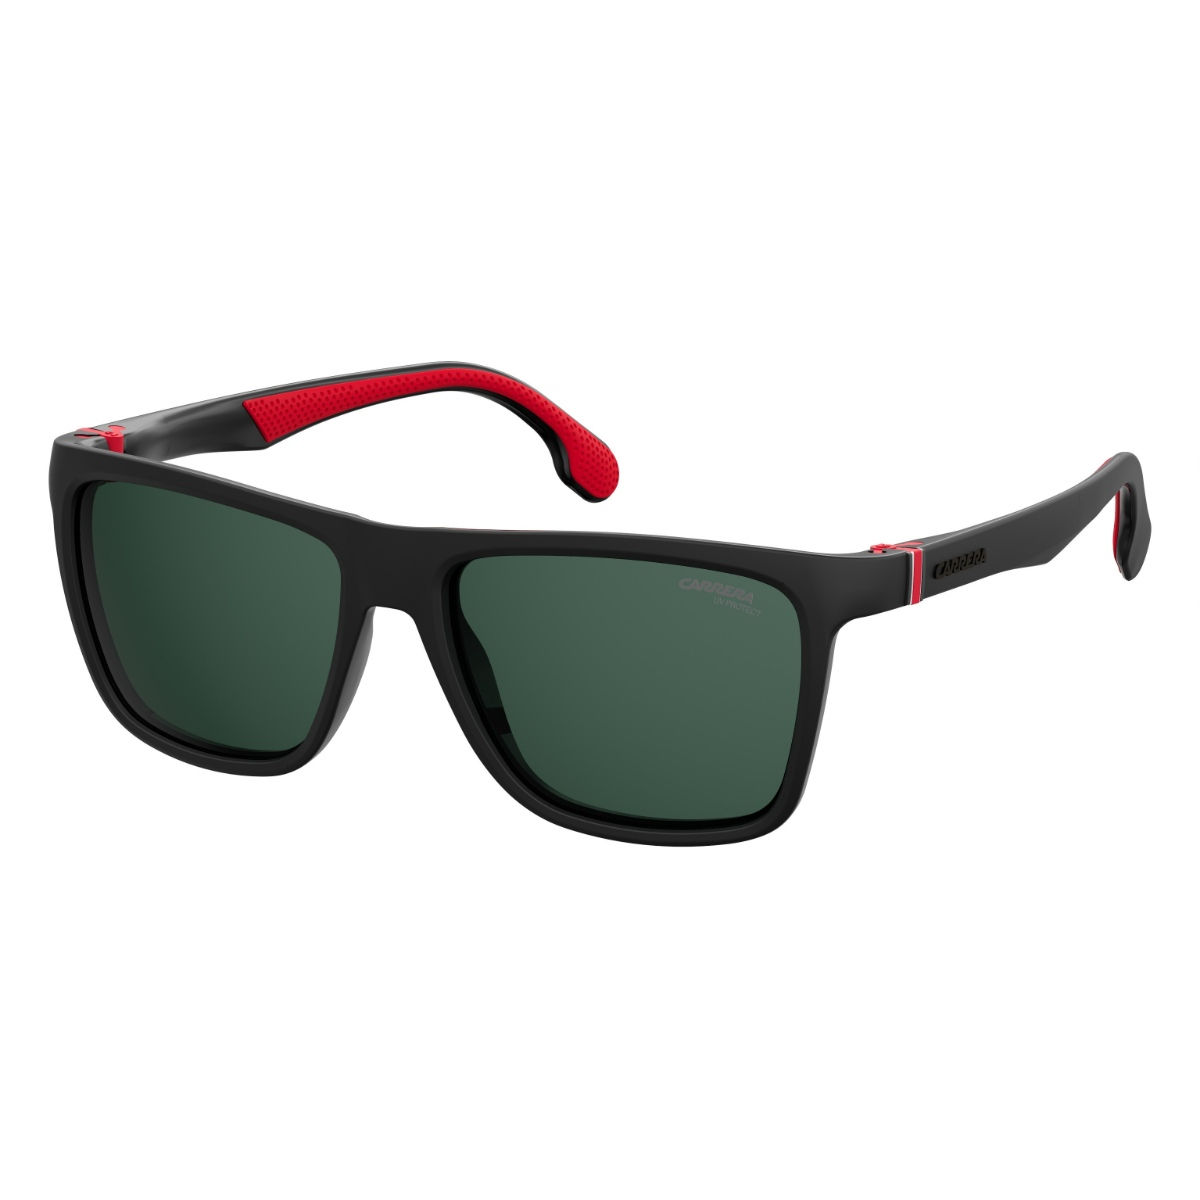 Carrera Sunglasses Green Lens Rectangular Sunglass Black Frame: Buy Carrera  Sunglasses Green Lens Rectangular Sunglass Black Frame Online at Best Price  in India | Nykaa